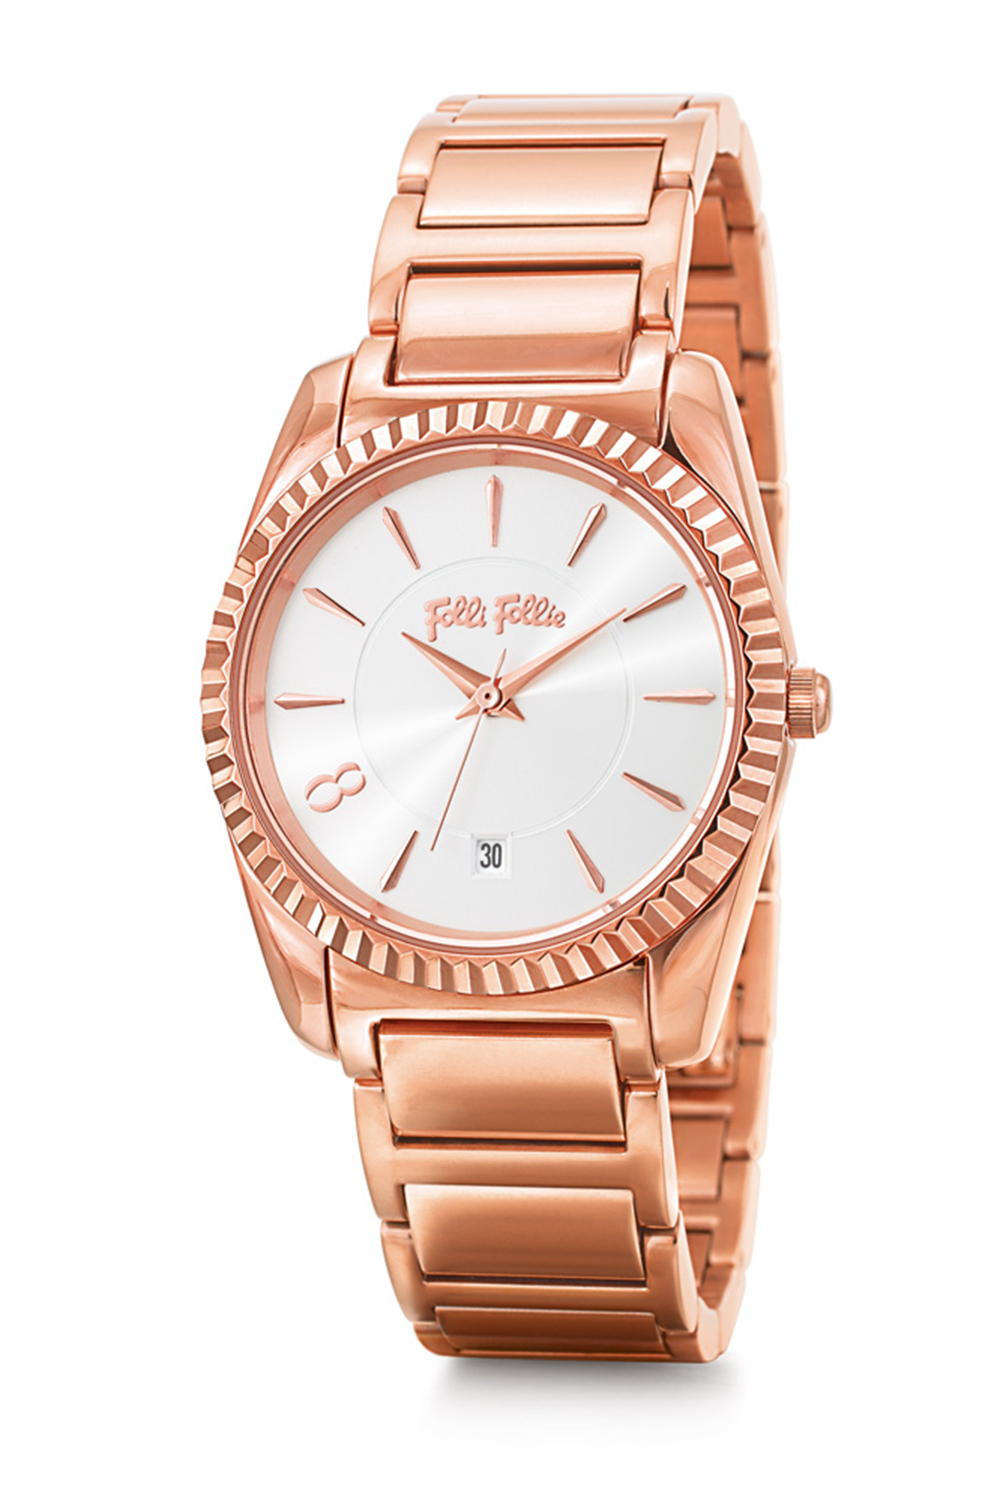 FOLLI FOLLIE – Γυναικείο ρολόι με μπρασελέ από ατσάλι FOLLI FOLLIE CHRONOS TALES ροζ χρυσό WF18R042BDZ-XX